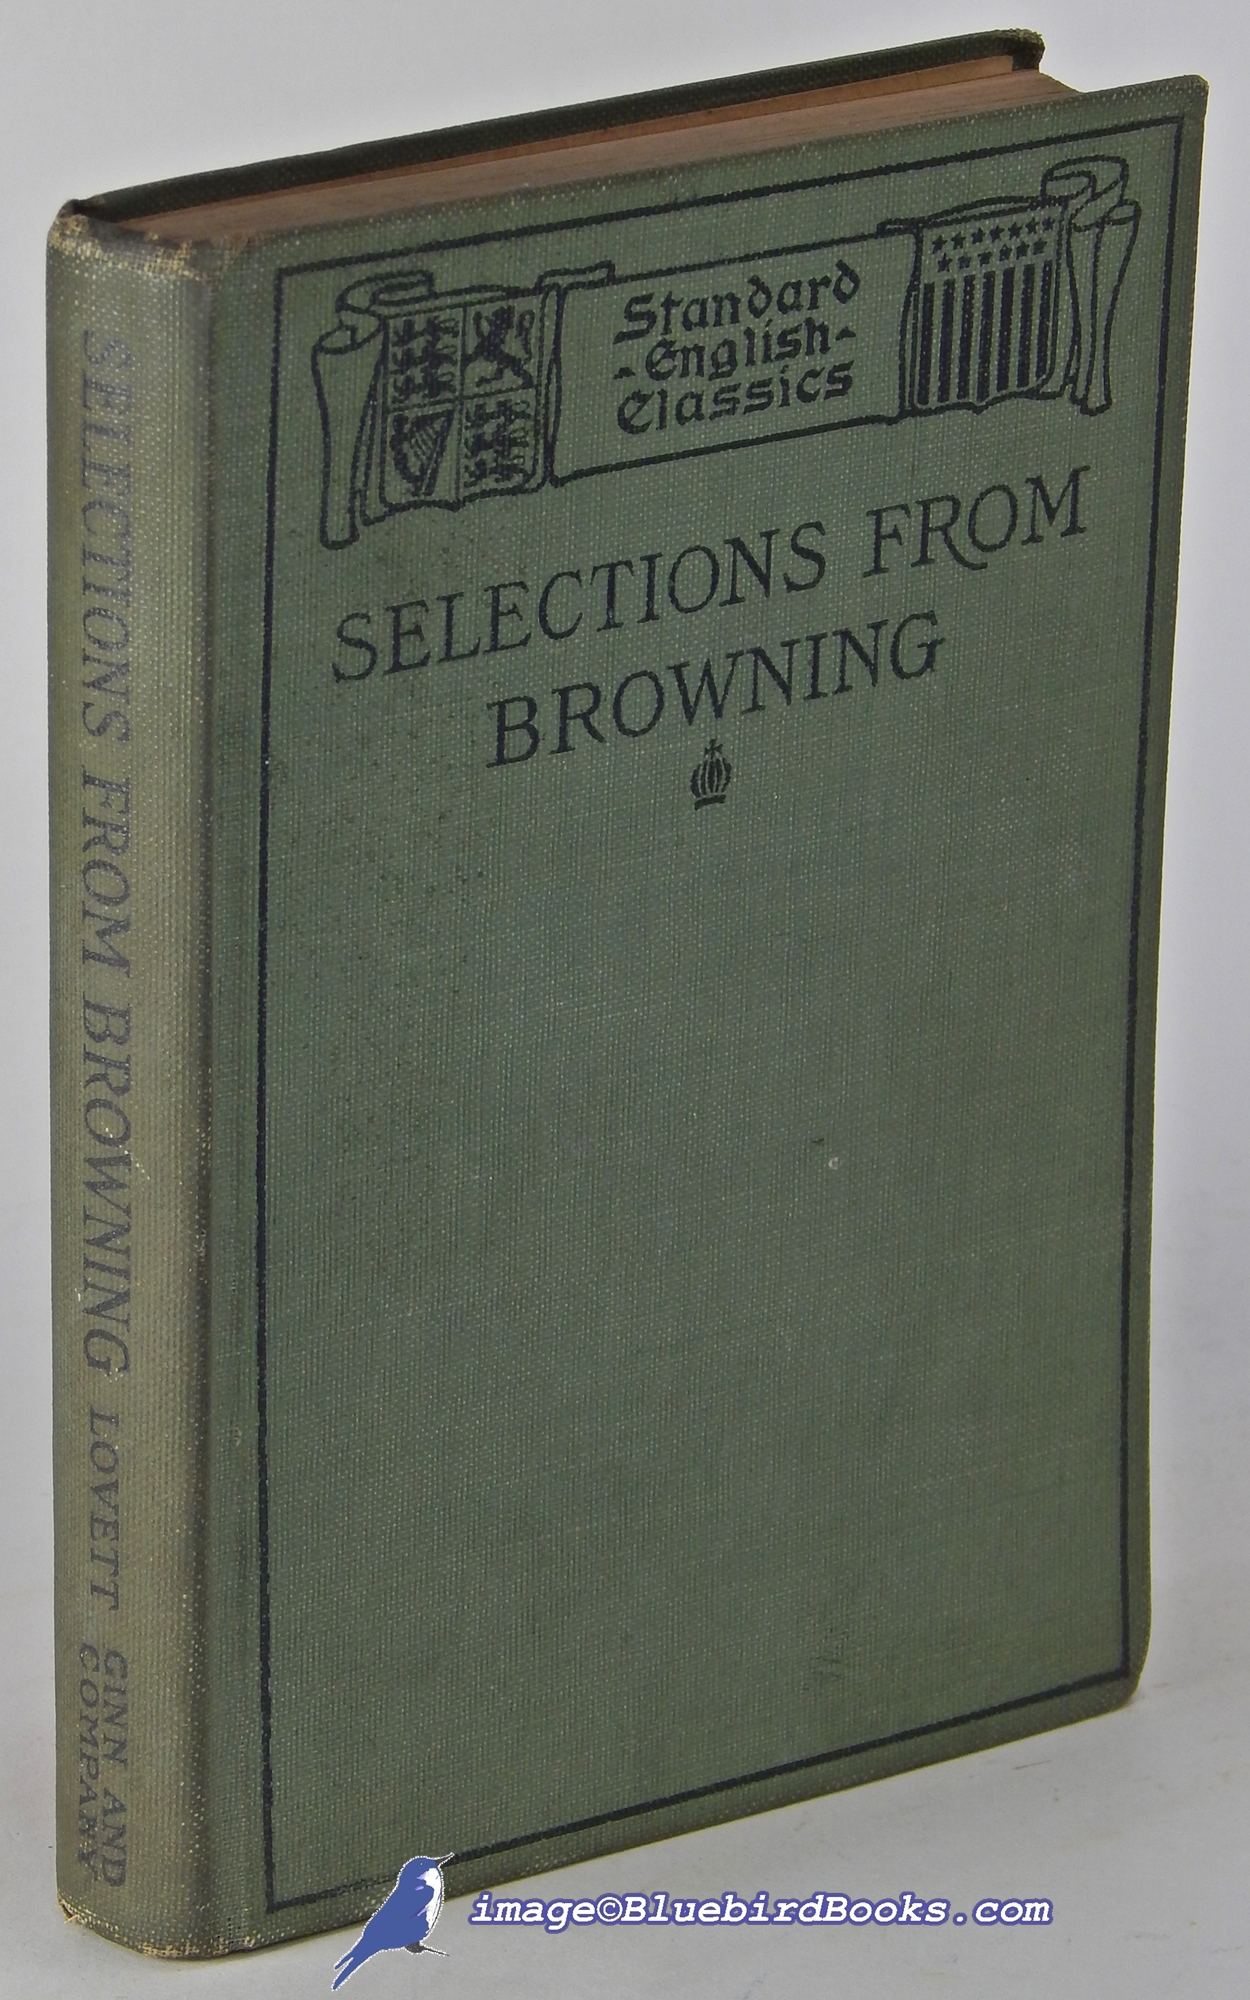 BROWNING, ROBERT (AUTHOR); LOVETT, ROBERT MORSS (EDITOR) - Selections from Browning